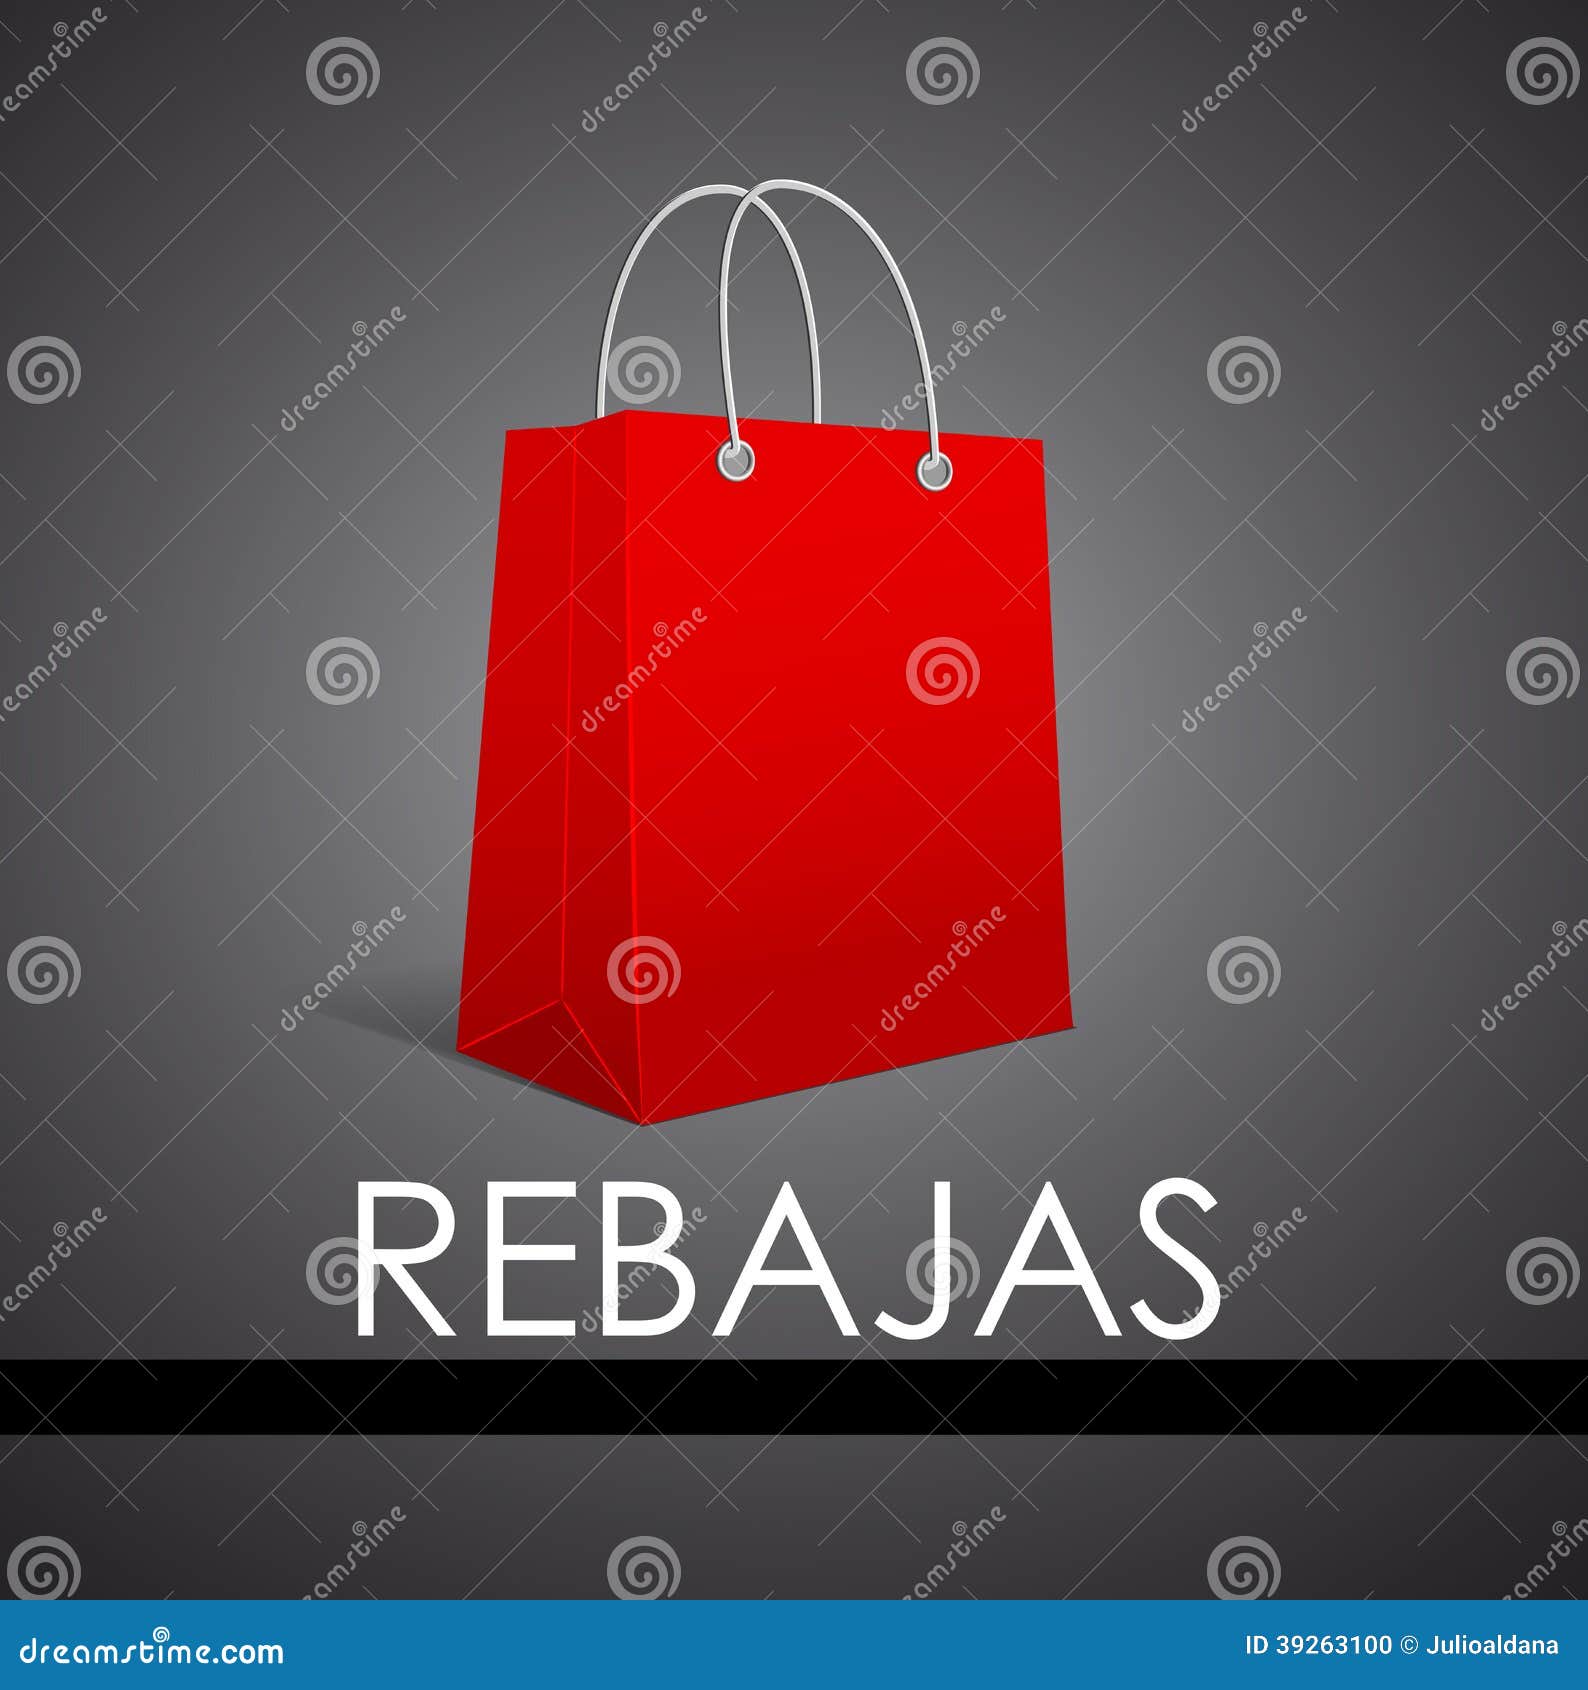 rebajas - sale, discounts spanish text